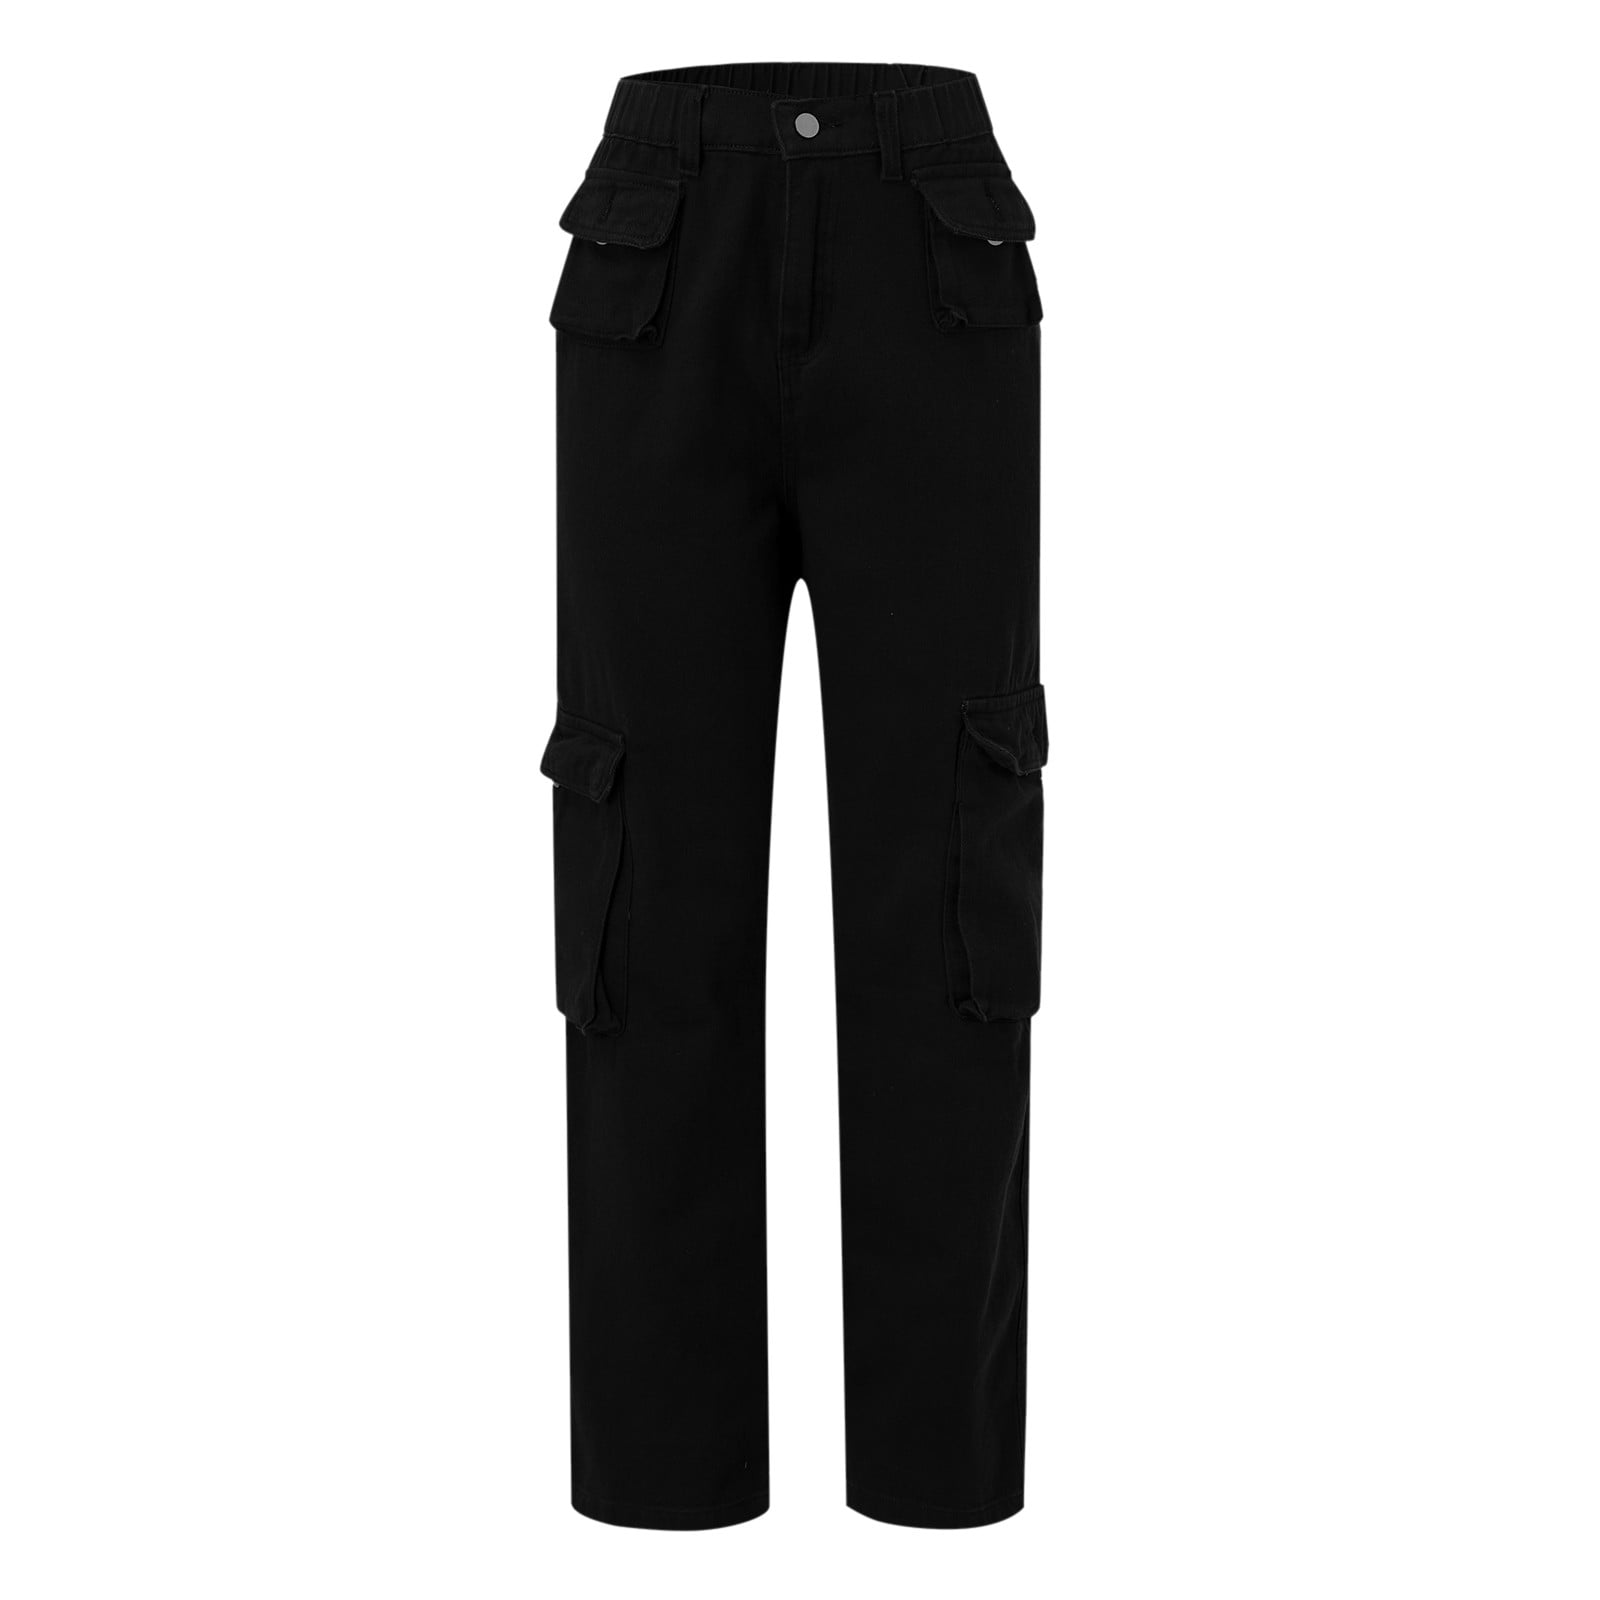 Aayomet Pants For Women Women's Cotton Sweatpants Open Bottom Yoga Sports  Pants Straight Leg Lounge Pants with Pockets,Black L